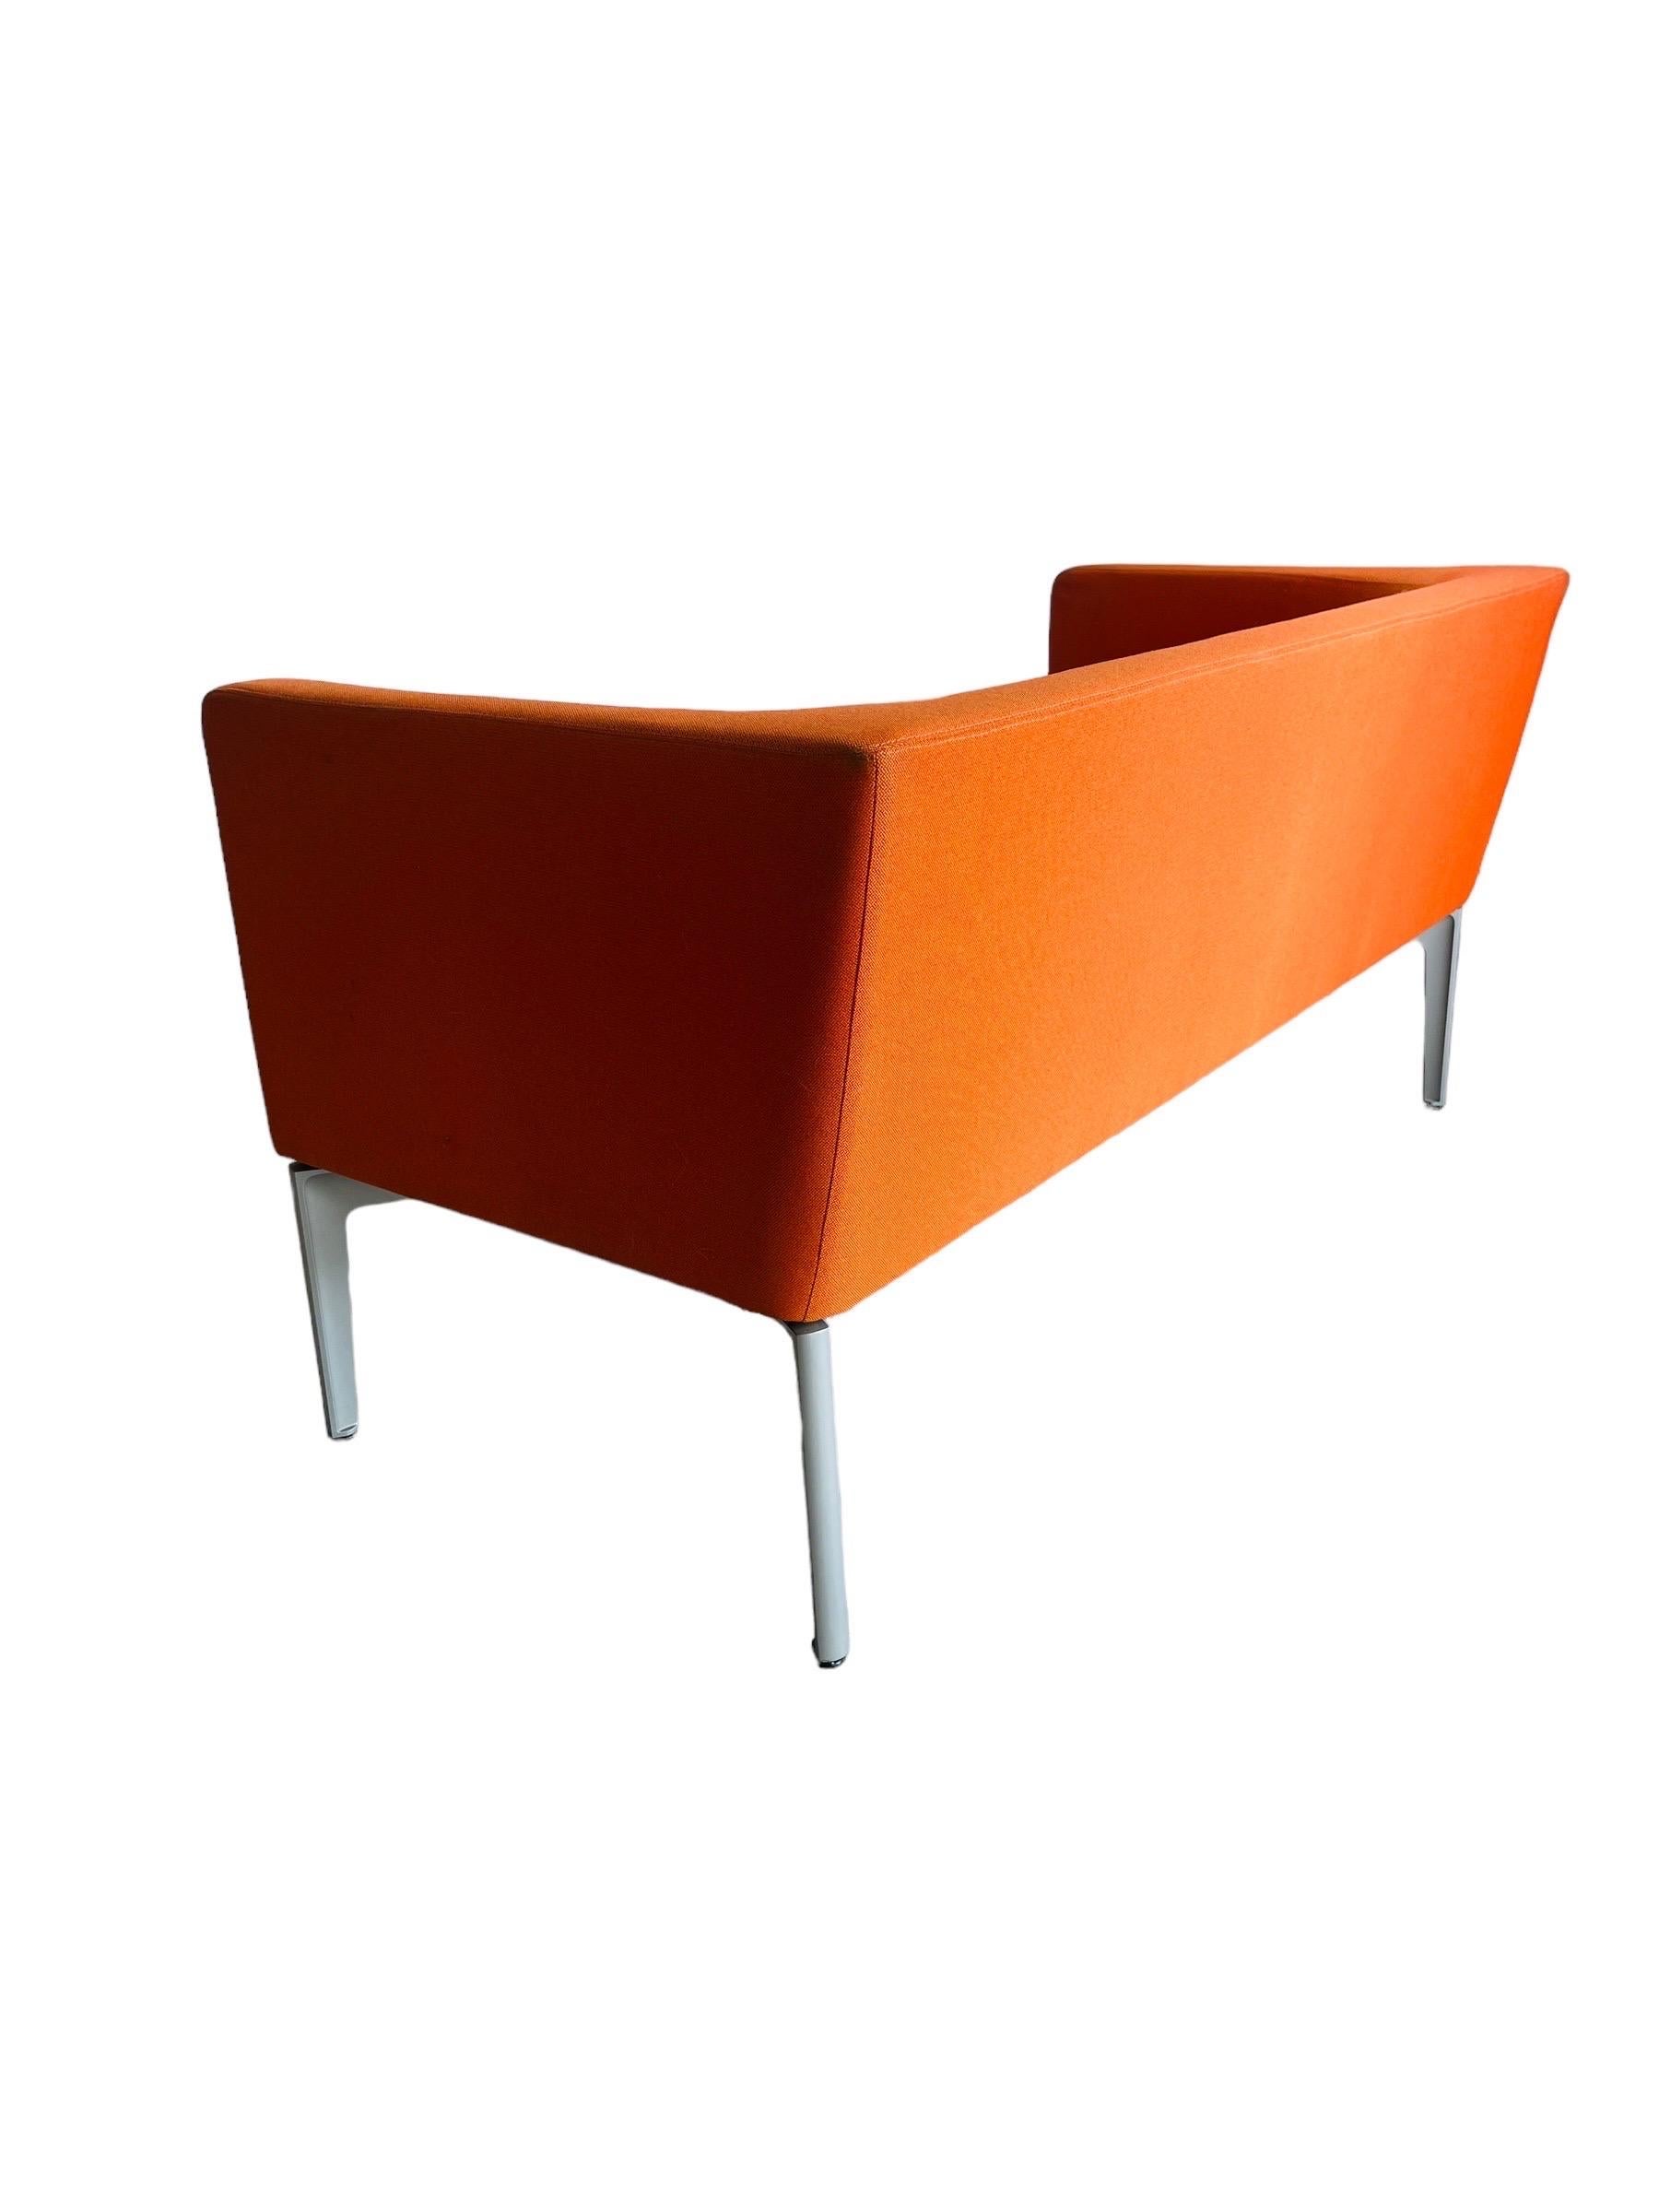 Contemporary Steelcase Bivi Rumble Seat Collection: Vibrant Orange Modern Sofa